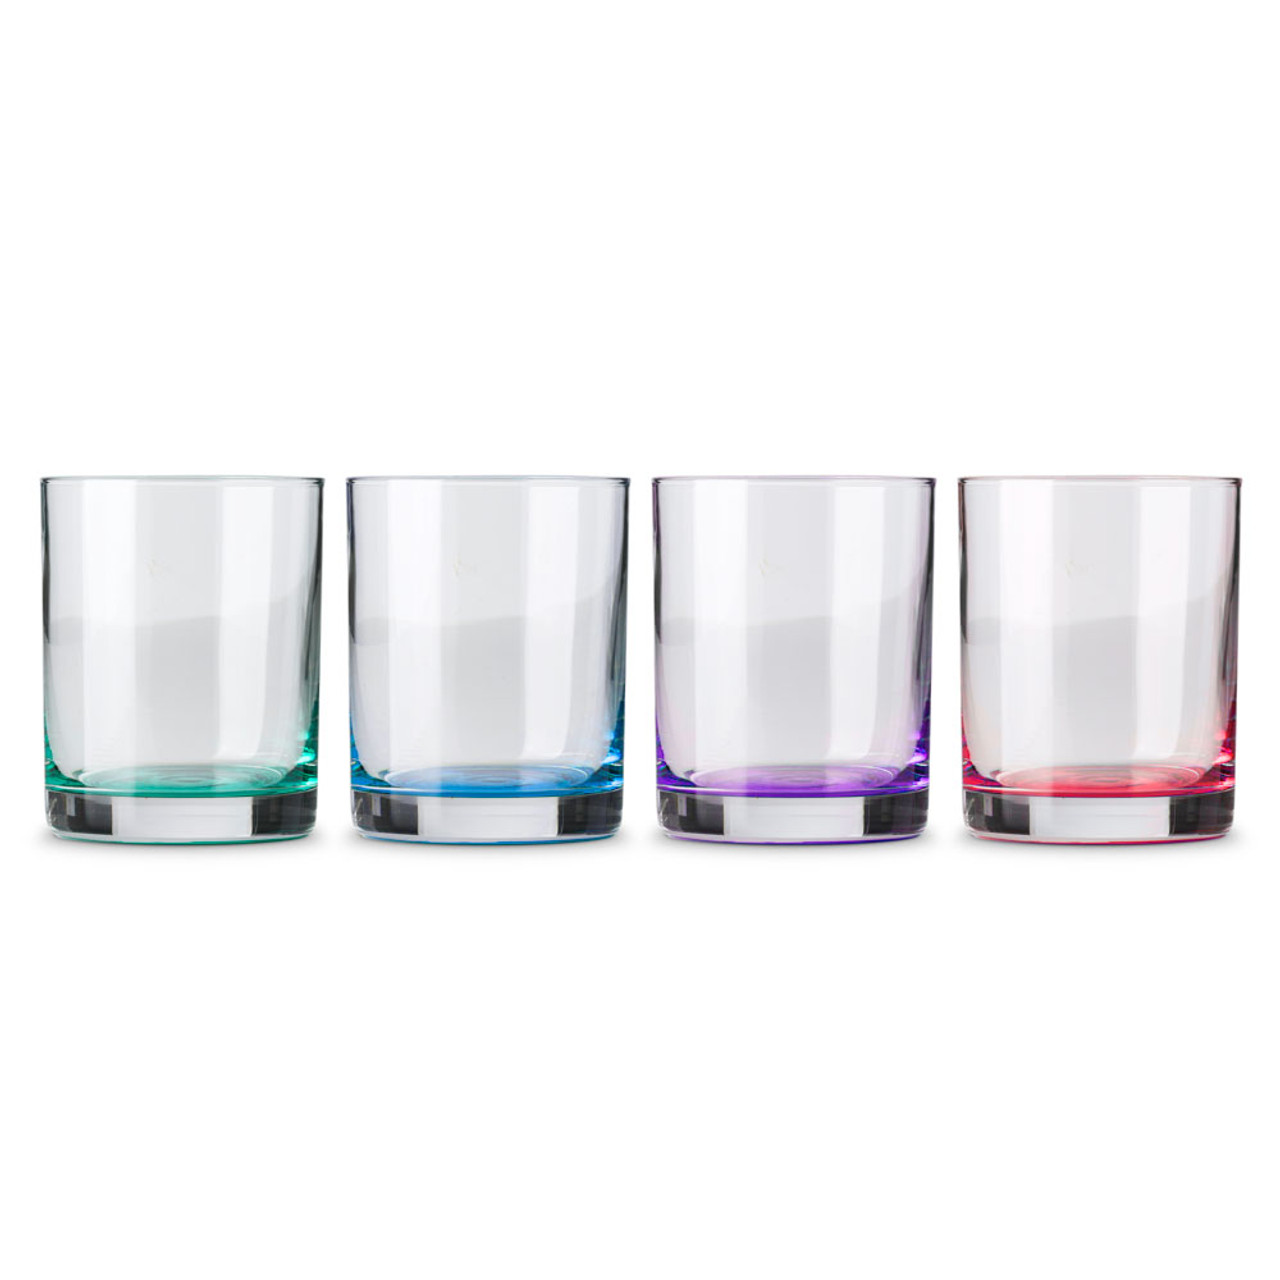 LAV Martini Glasses Set of 6 - Multi colored Martini Cocktail Glasses 6 oz